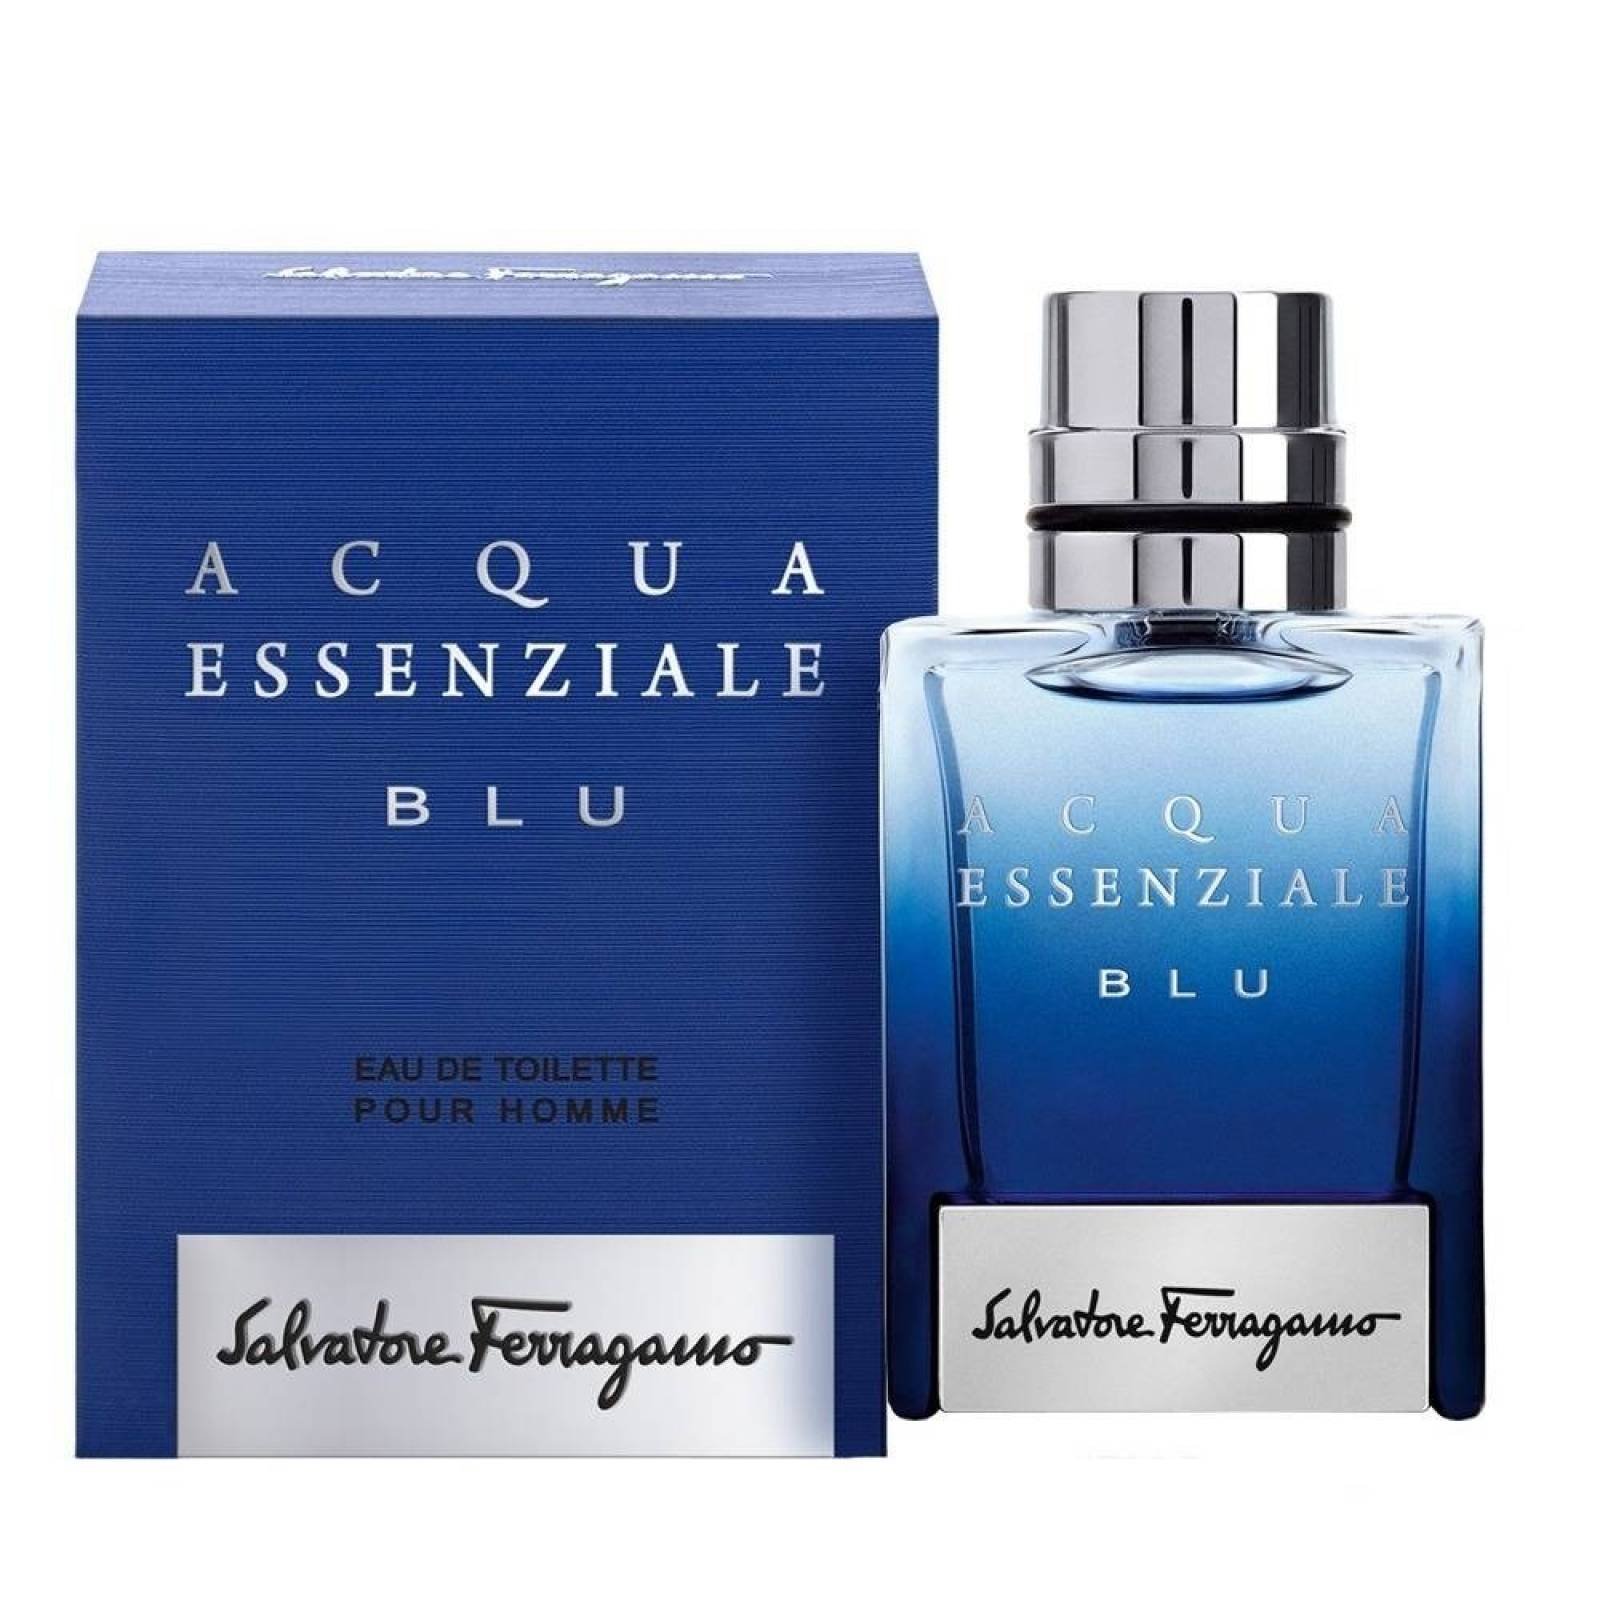 Acqua Essenziale Blu de Salvatore Ferragamo Eau de Toilette 100 ml